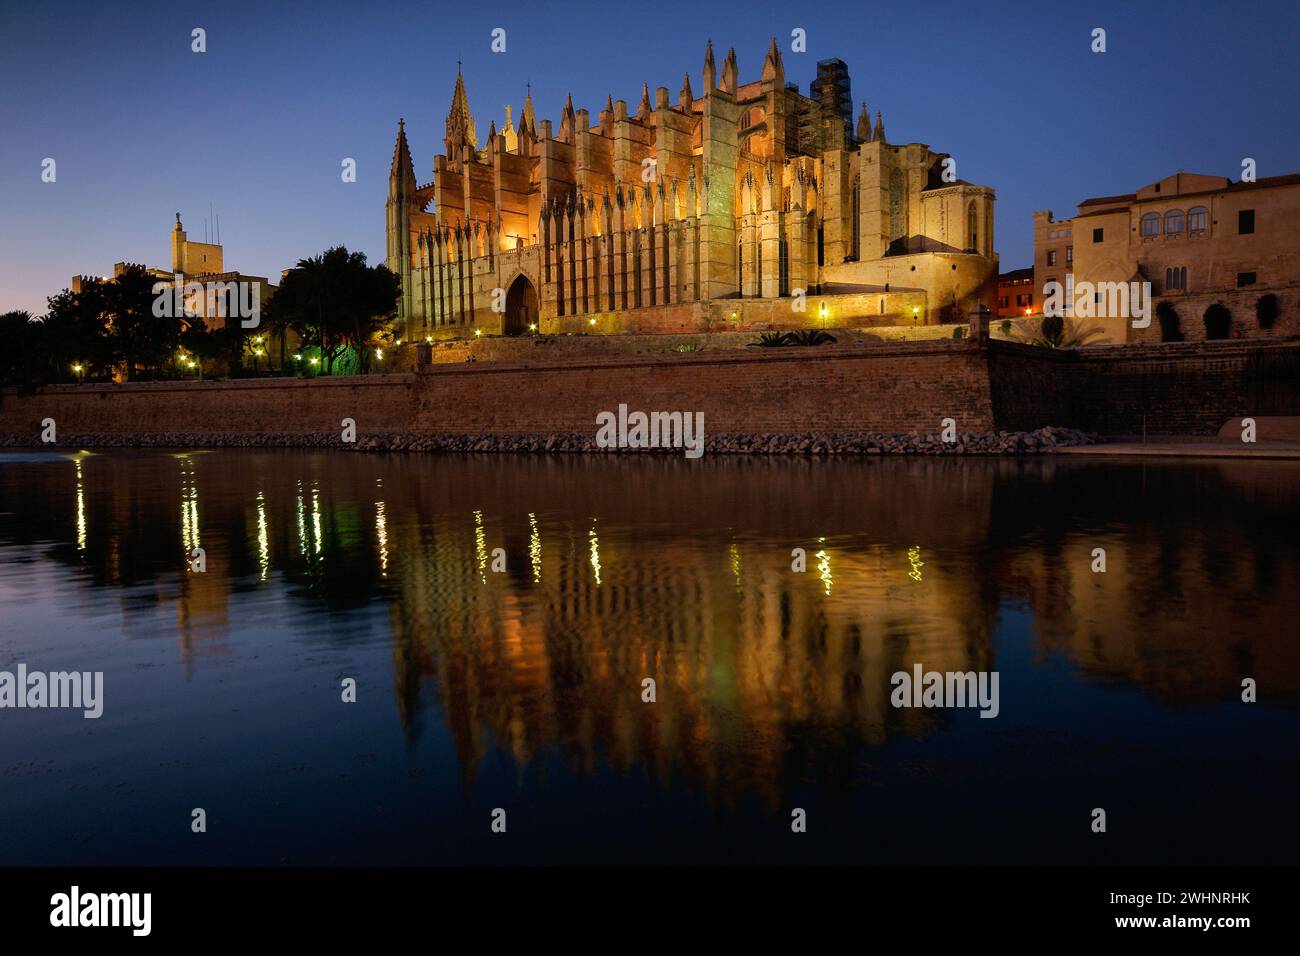 Catedral de Palma (La Seu)(s.XIV-XVI).Palma.Mallorca.Baleares.EspaÃ±a. Stockfoto